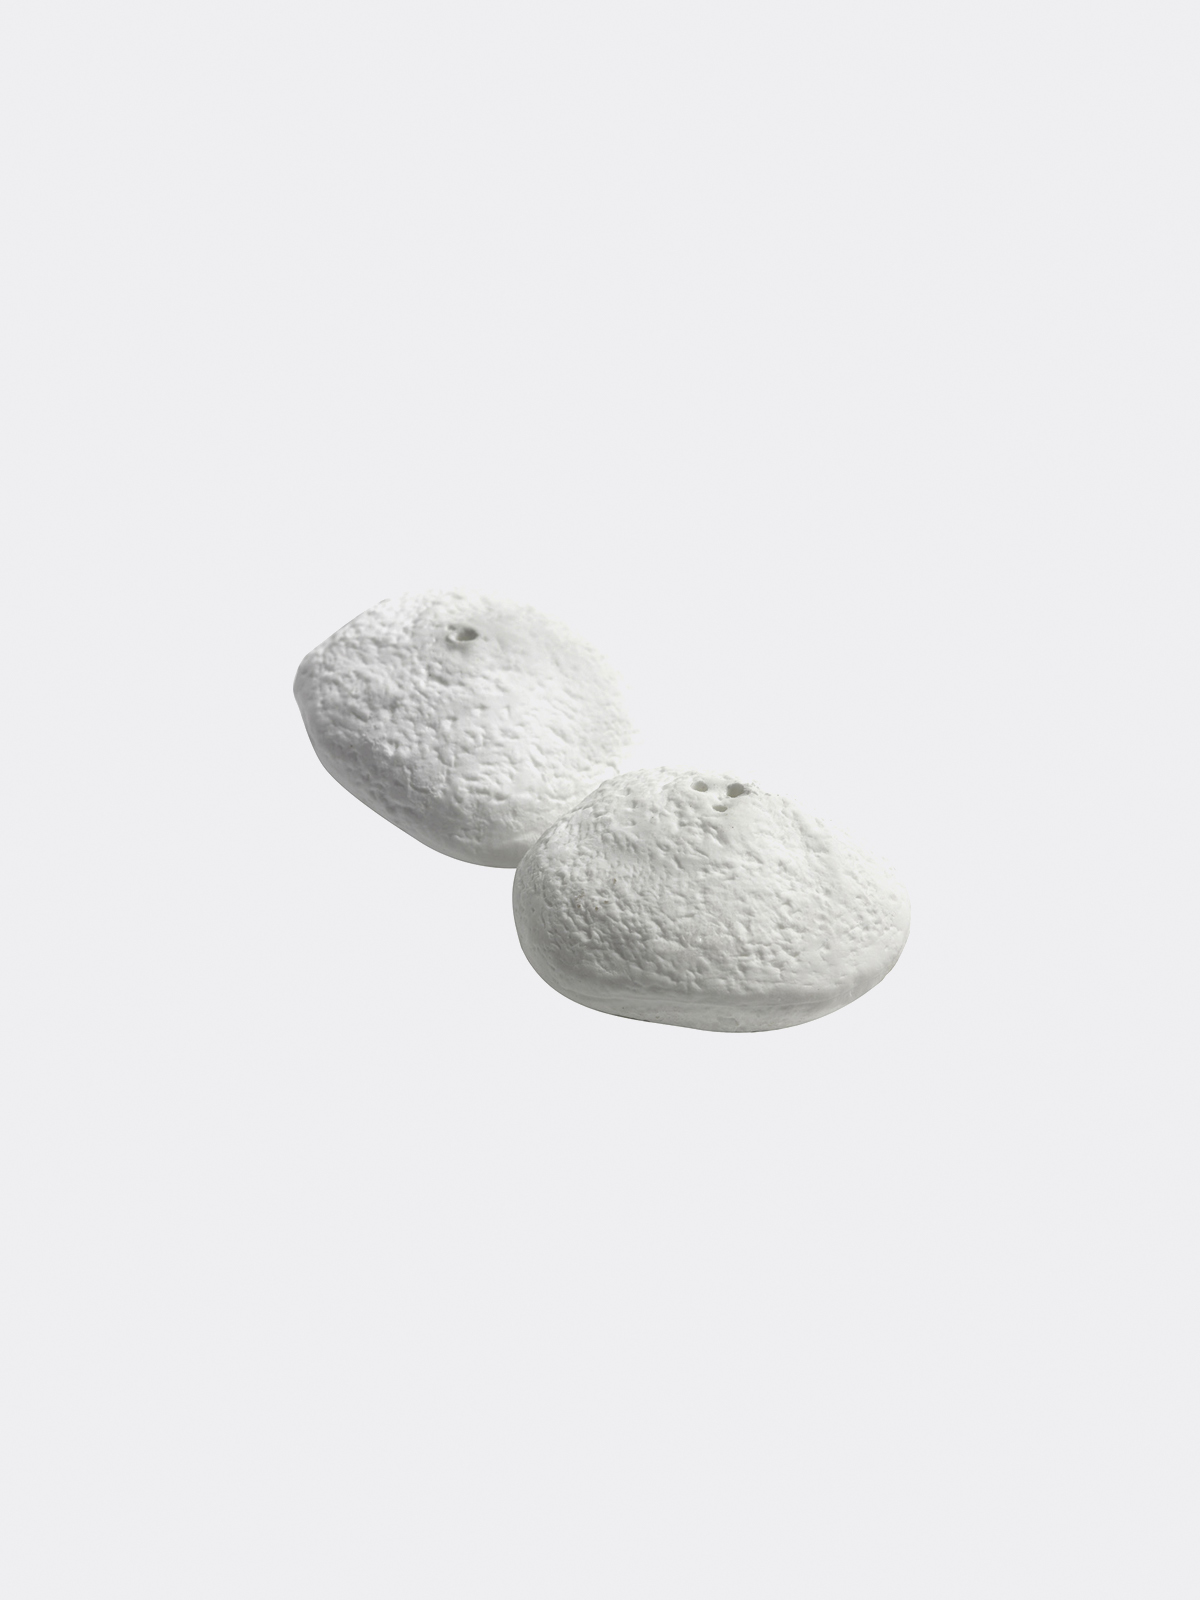 Serax Salt and Pepper Shakers with Minimalist Design by Designer Roos Van de Velde - Set of 2